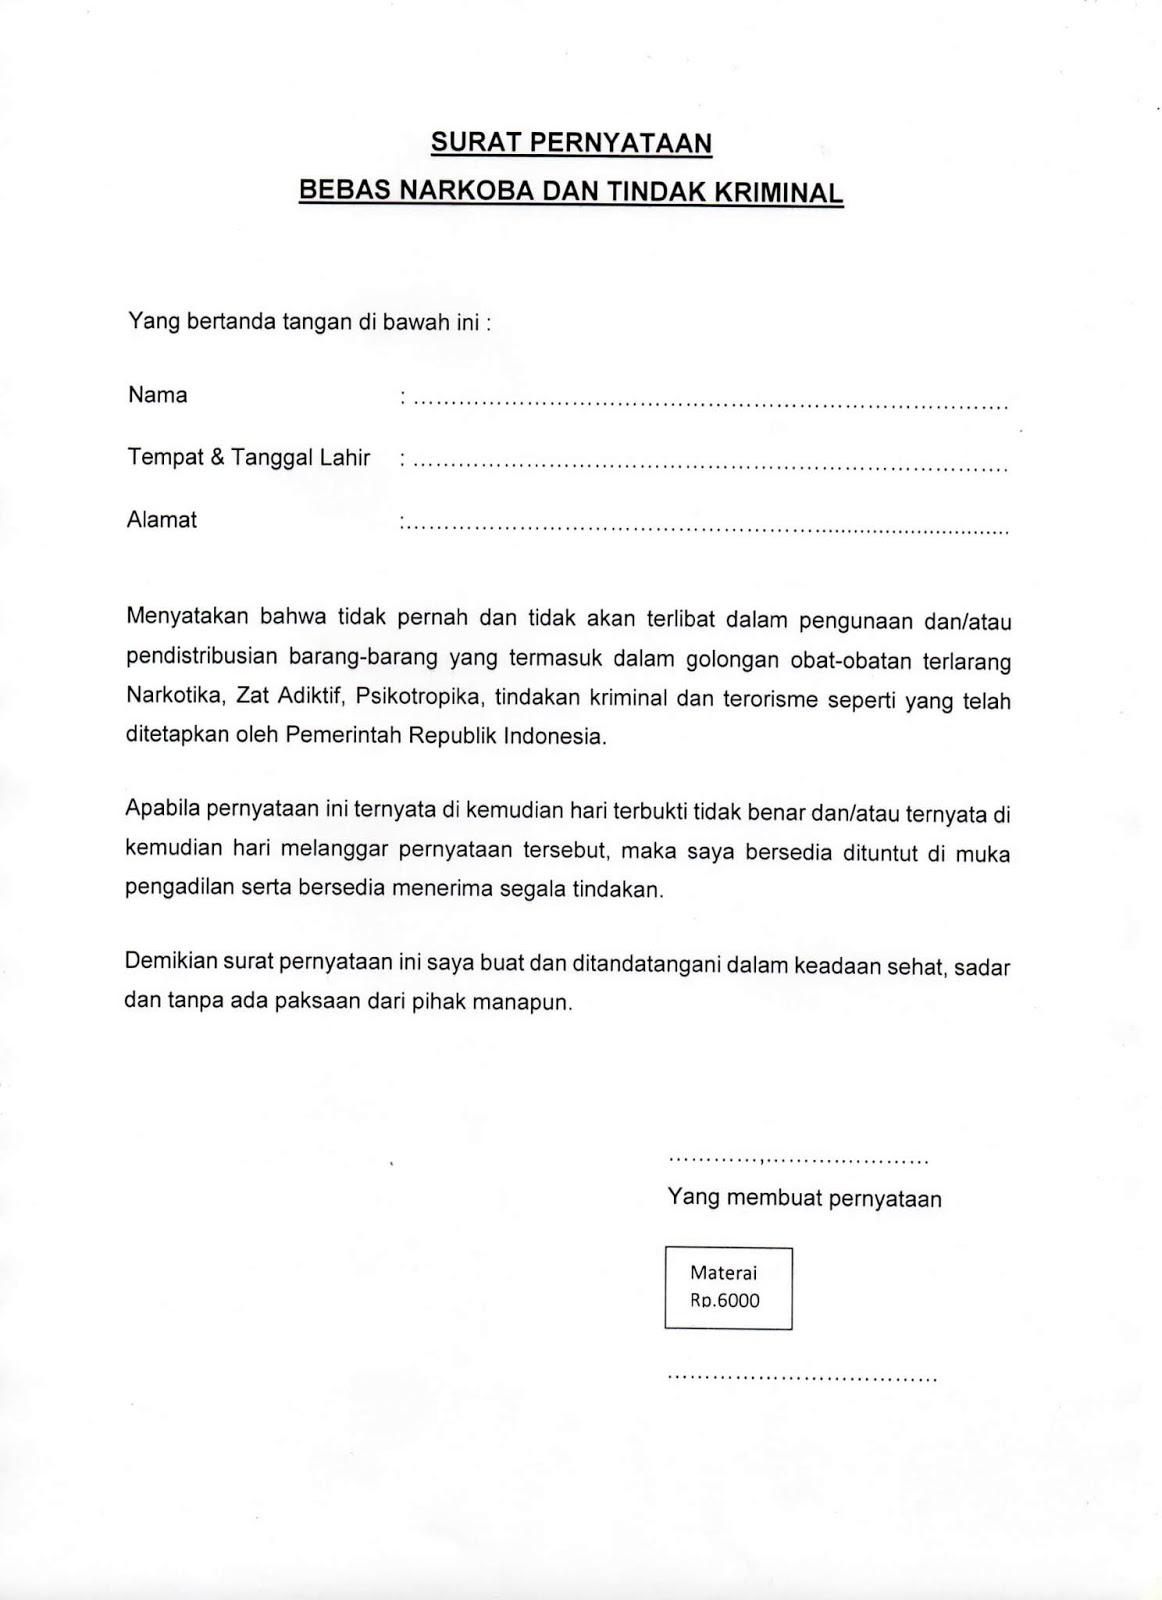 Contoh Surat Lamaran Dan Pernyataan Pemerintahan Kota Palembang 2019